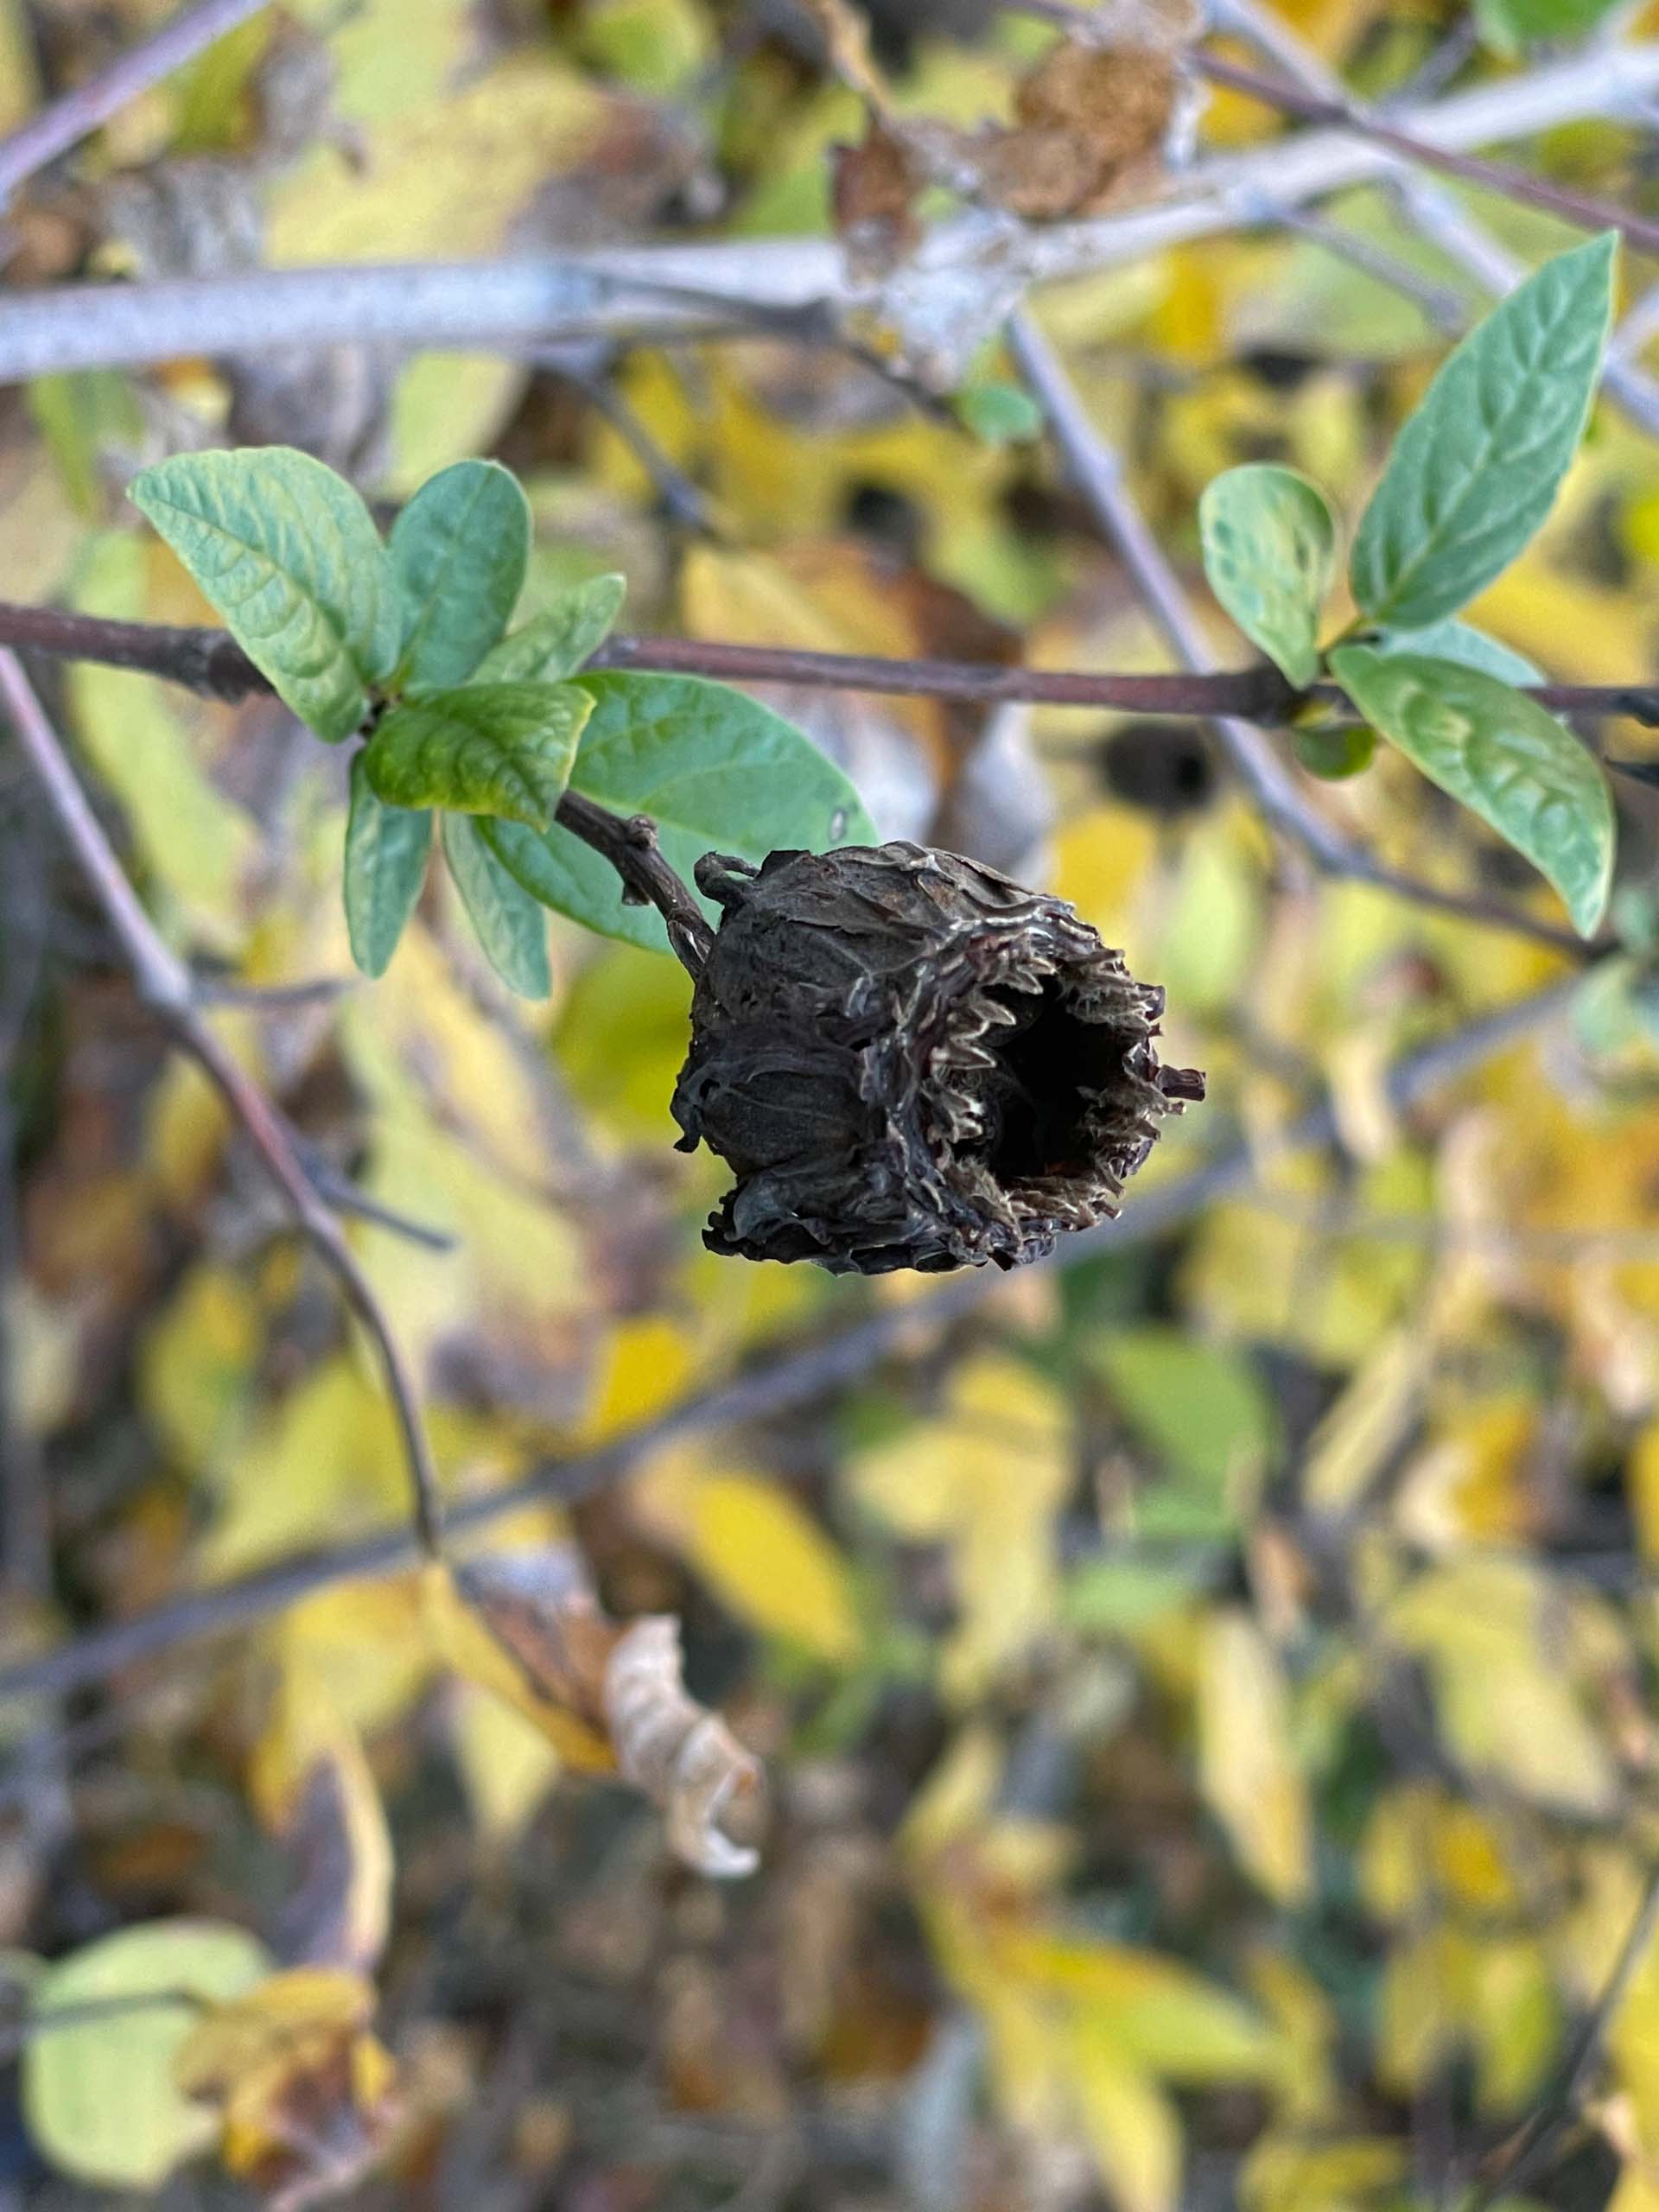 California spicebush seedpod. C. Harvey.